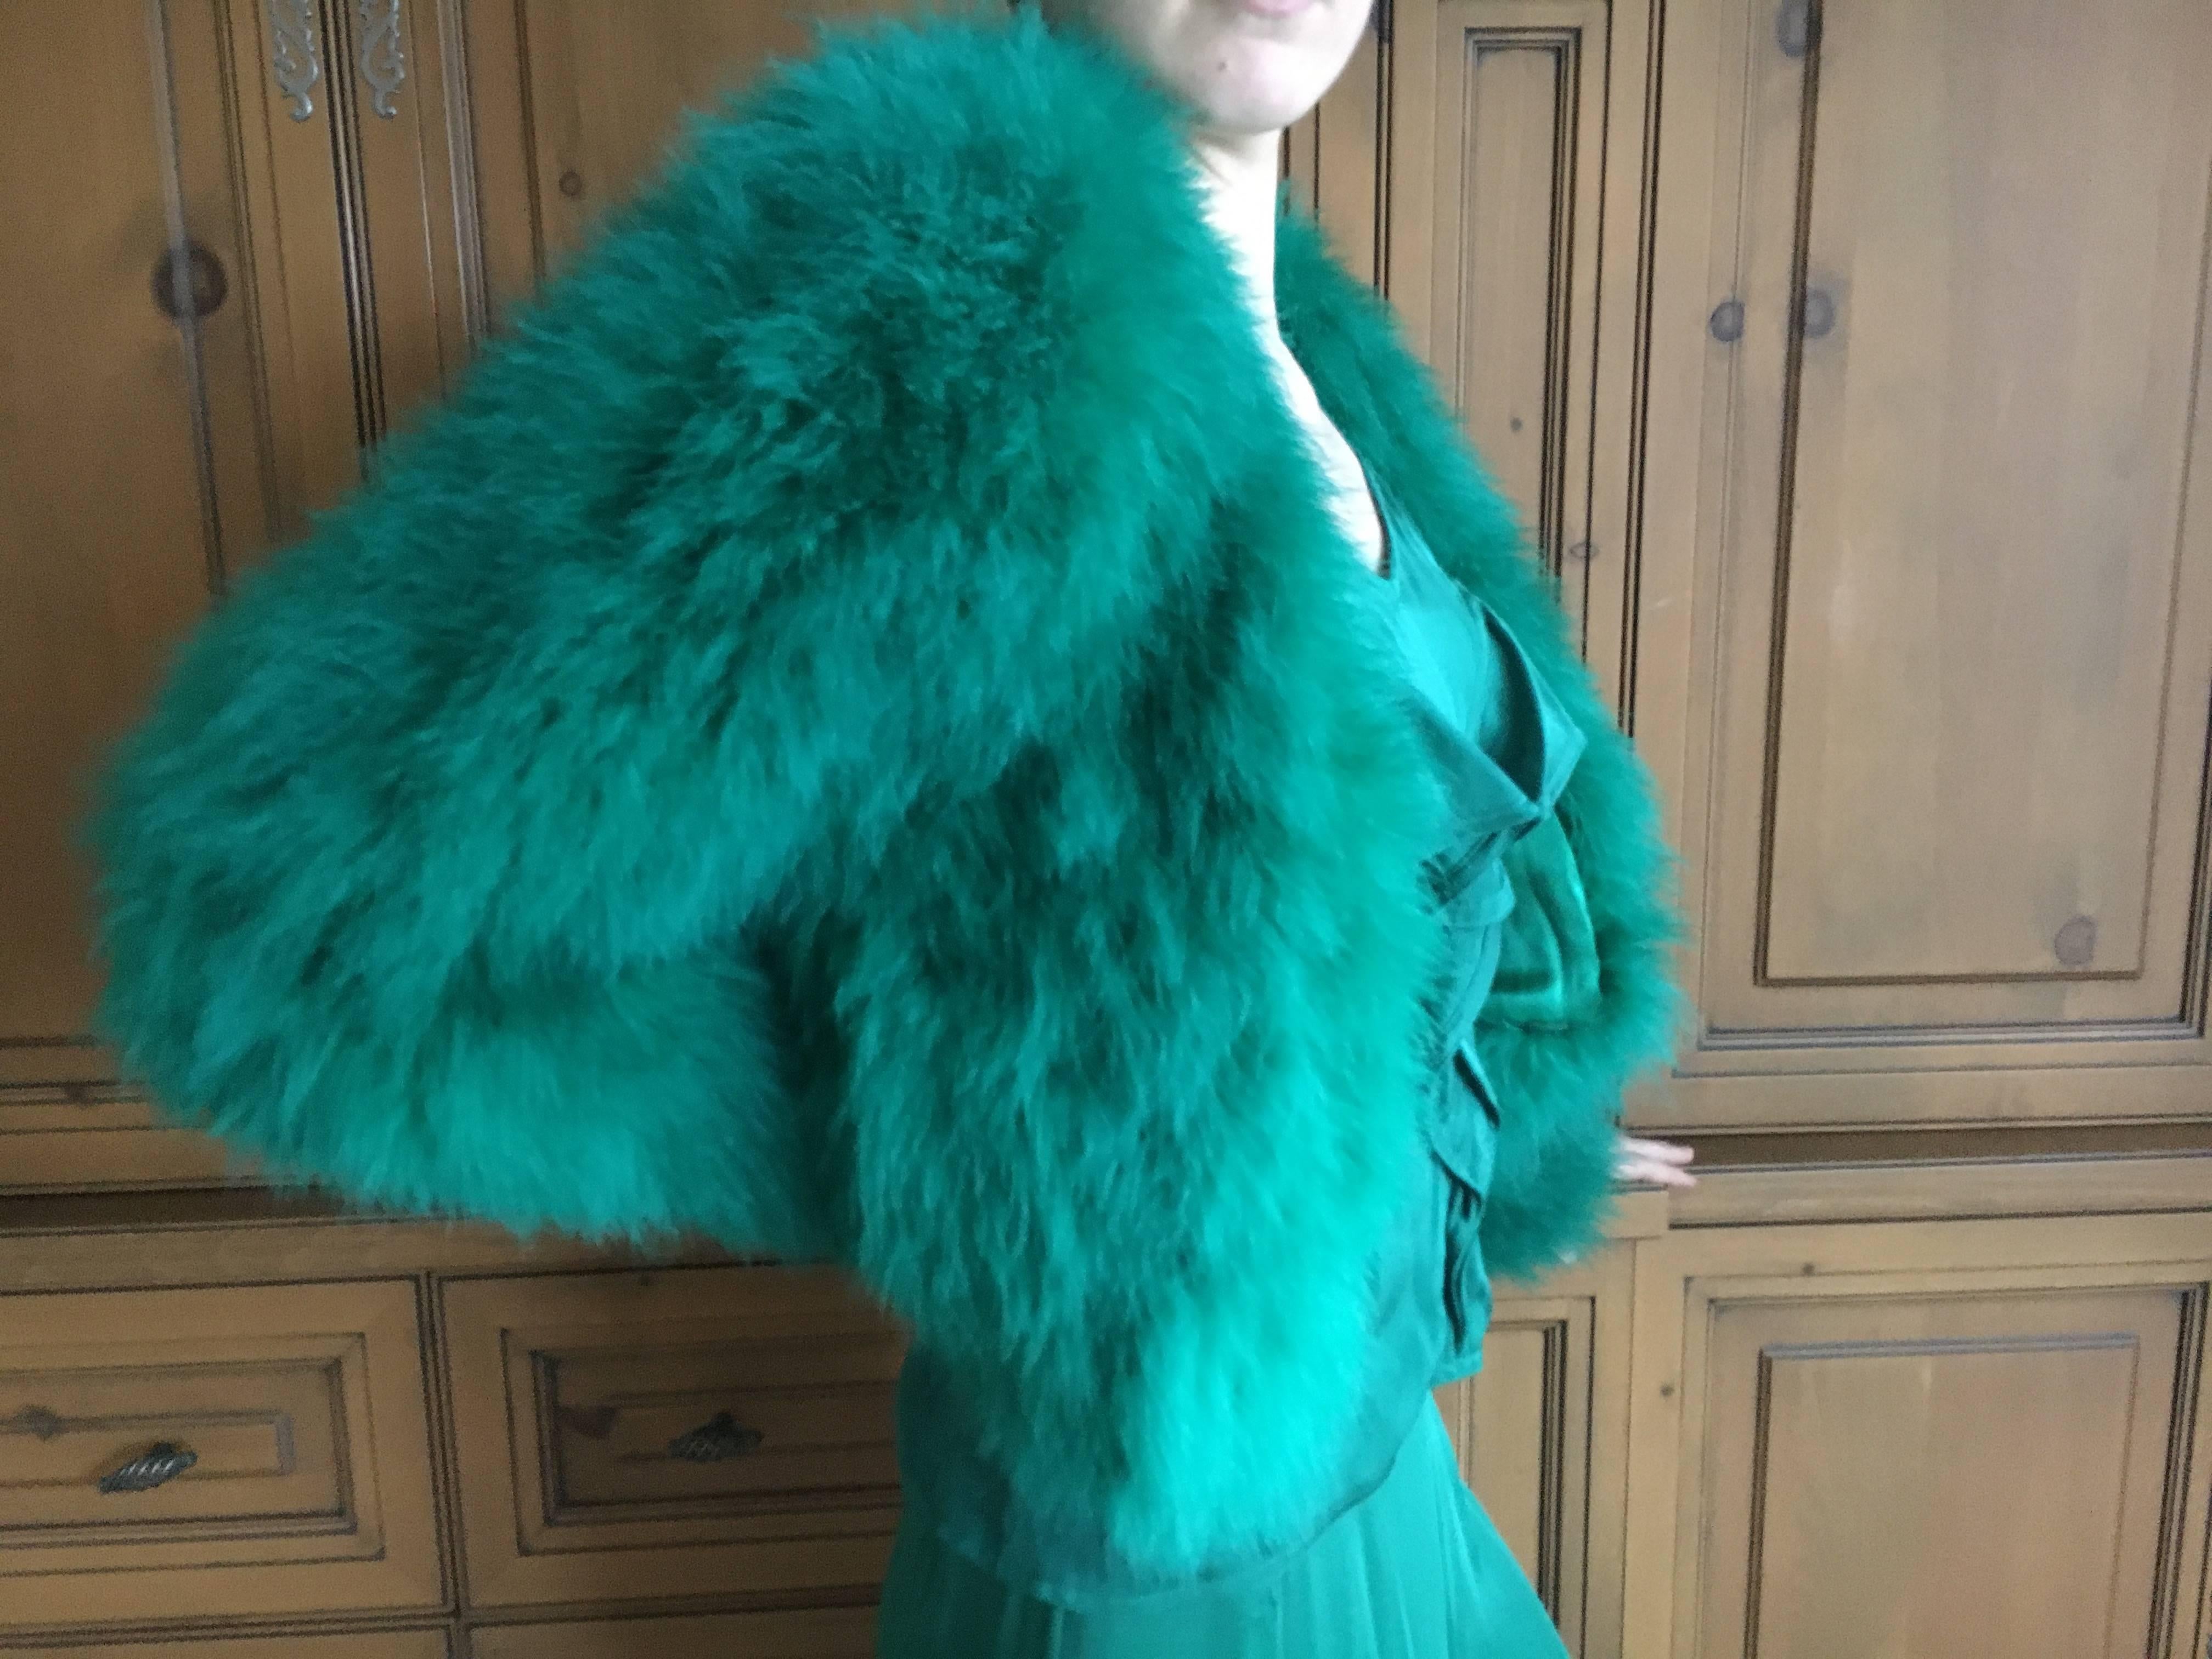  Saint Laurent by Hedi Slimane 2015 Green Turkey Feather Jacket For Sale 1